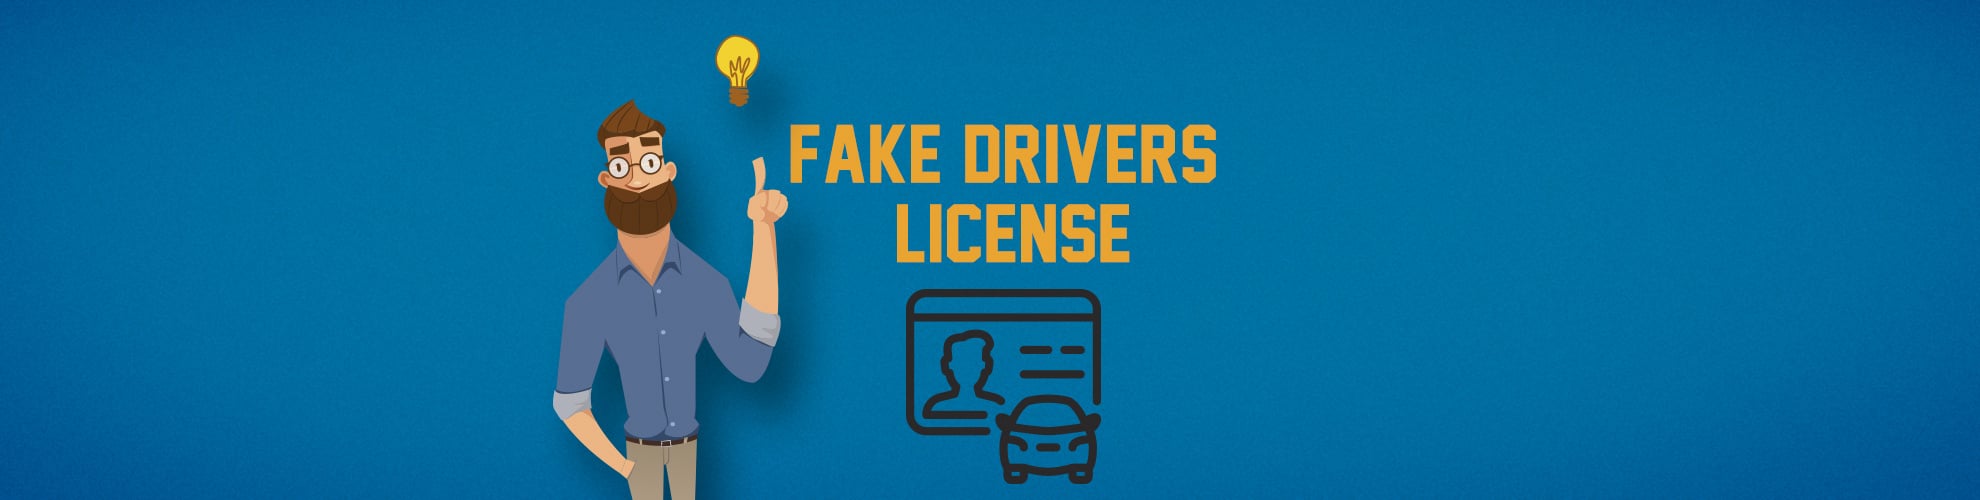 Buy Fake Driver’s License Card Online